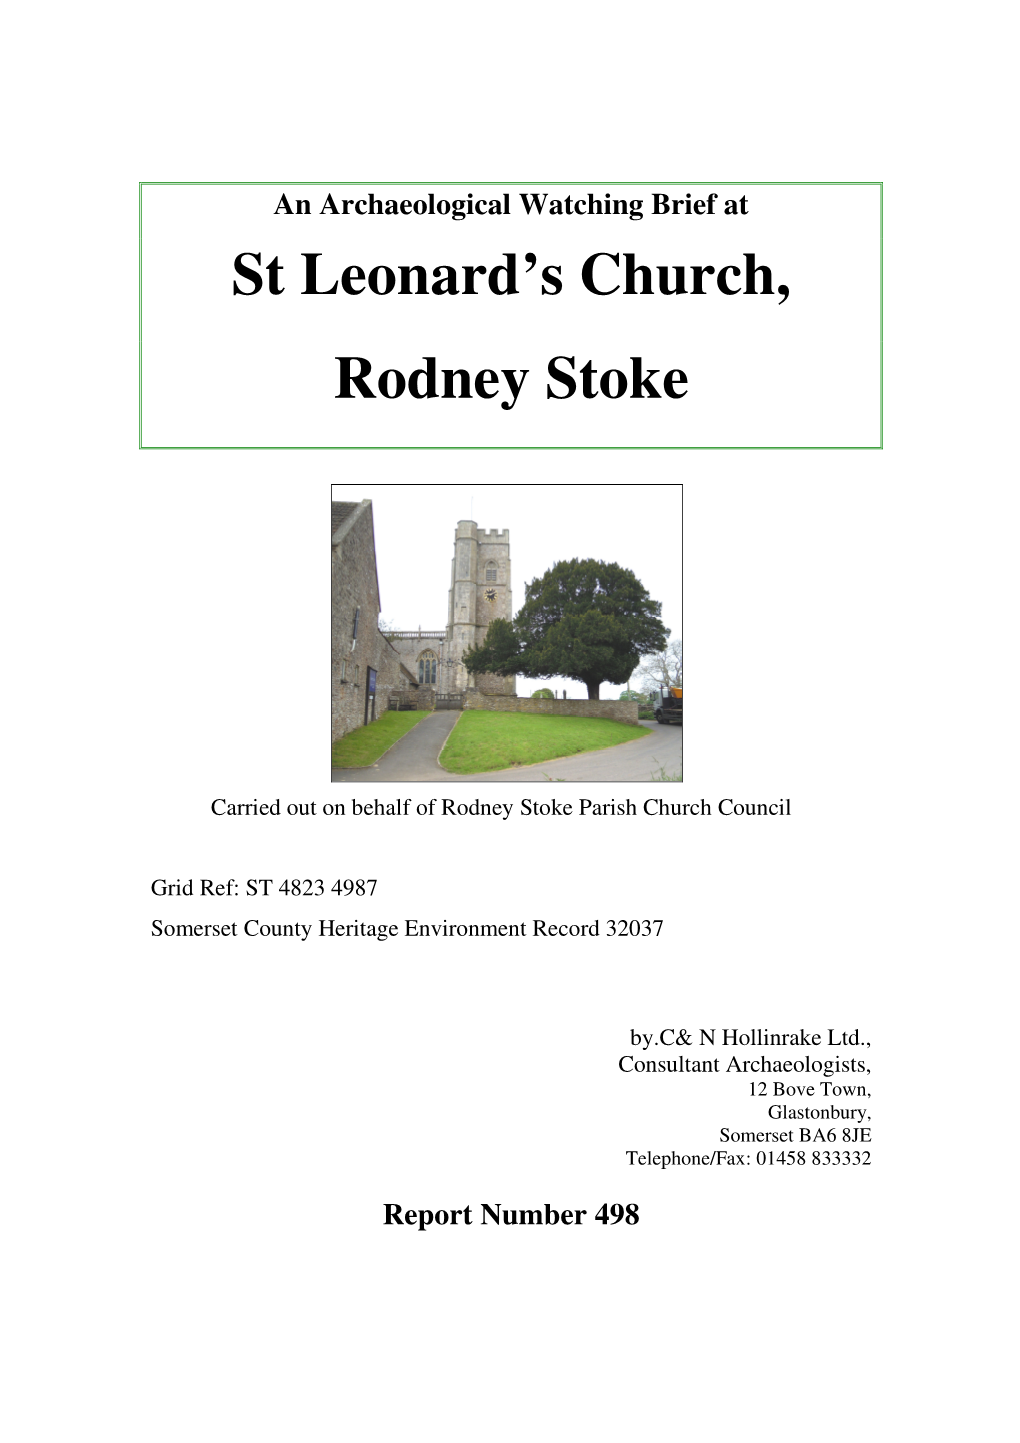 St Leonard's Church, Rodney Stoke